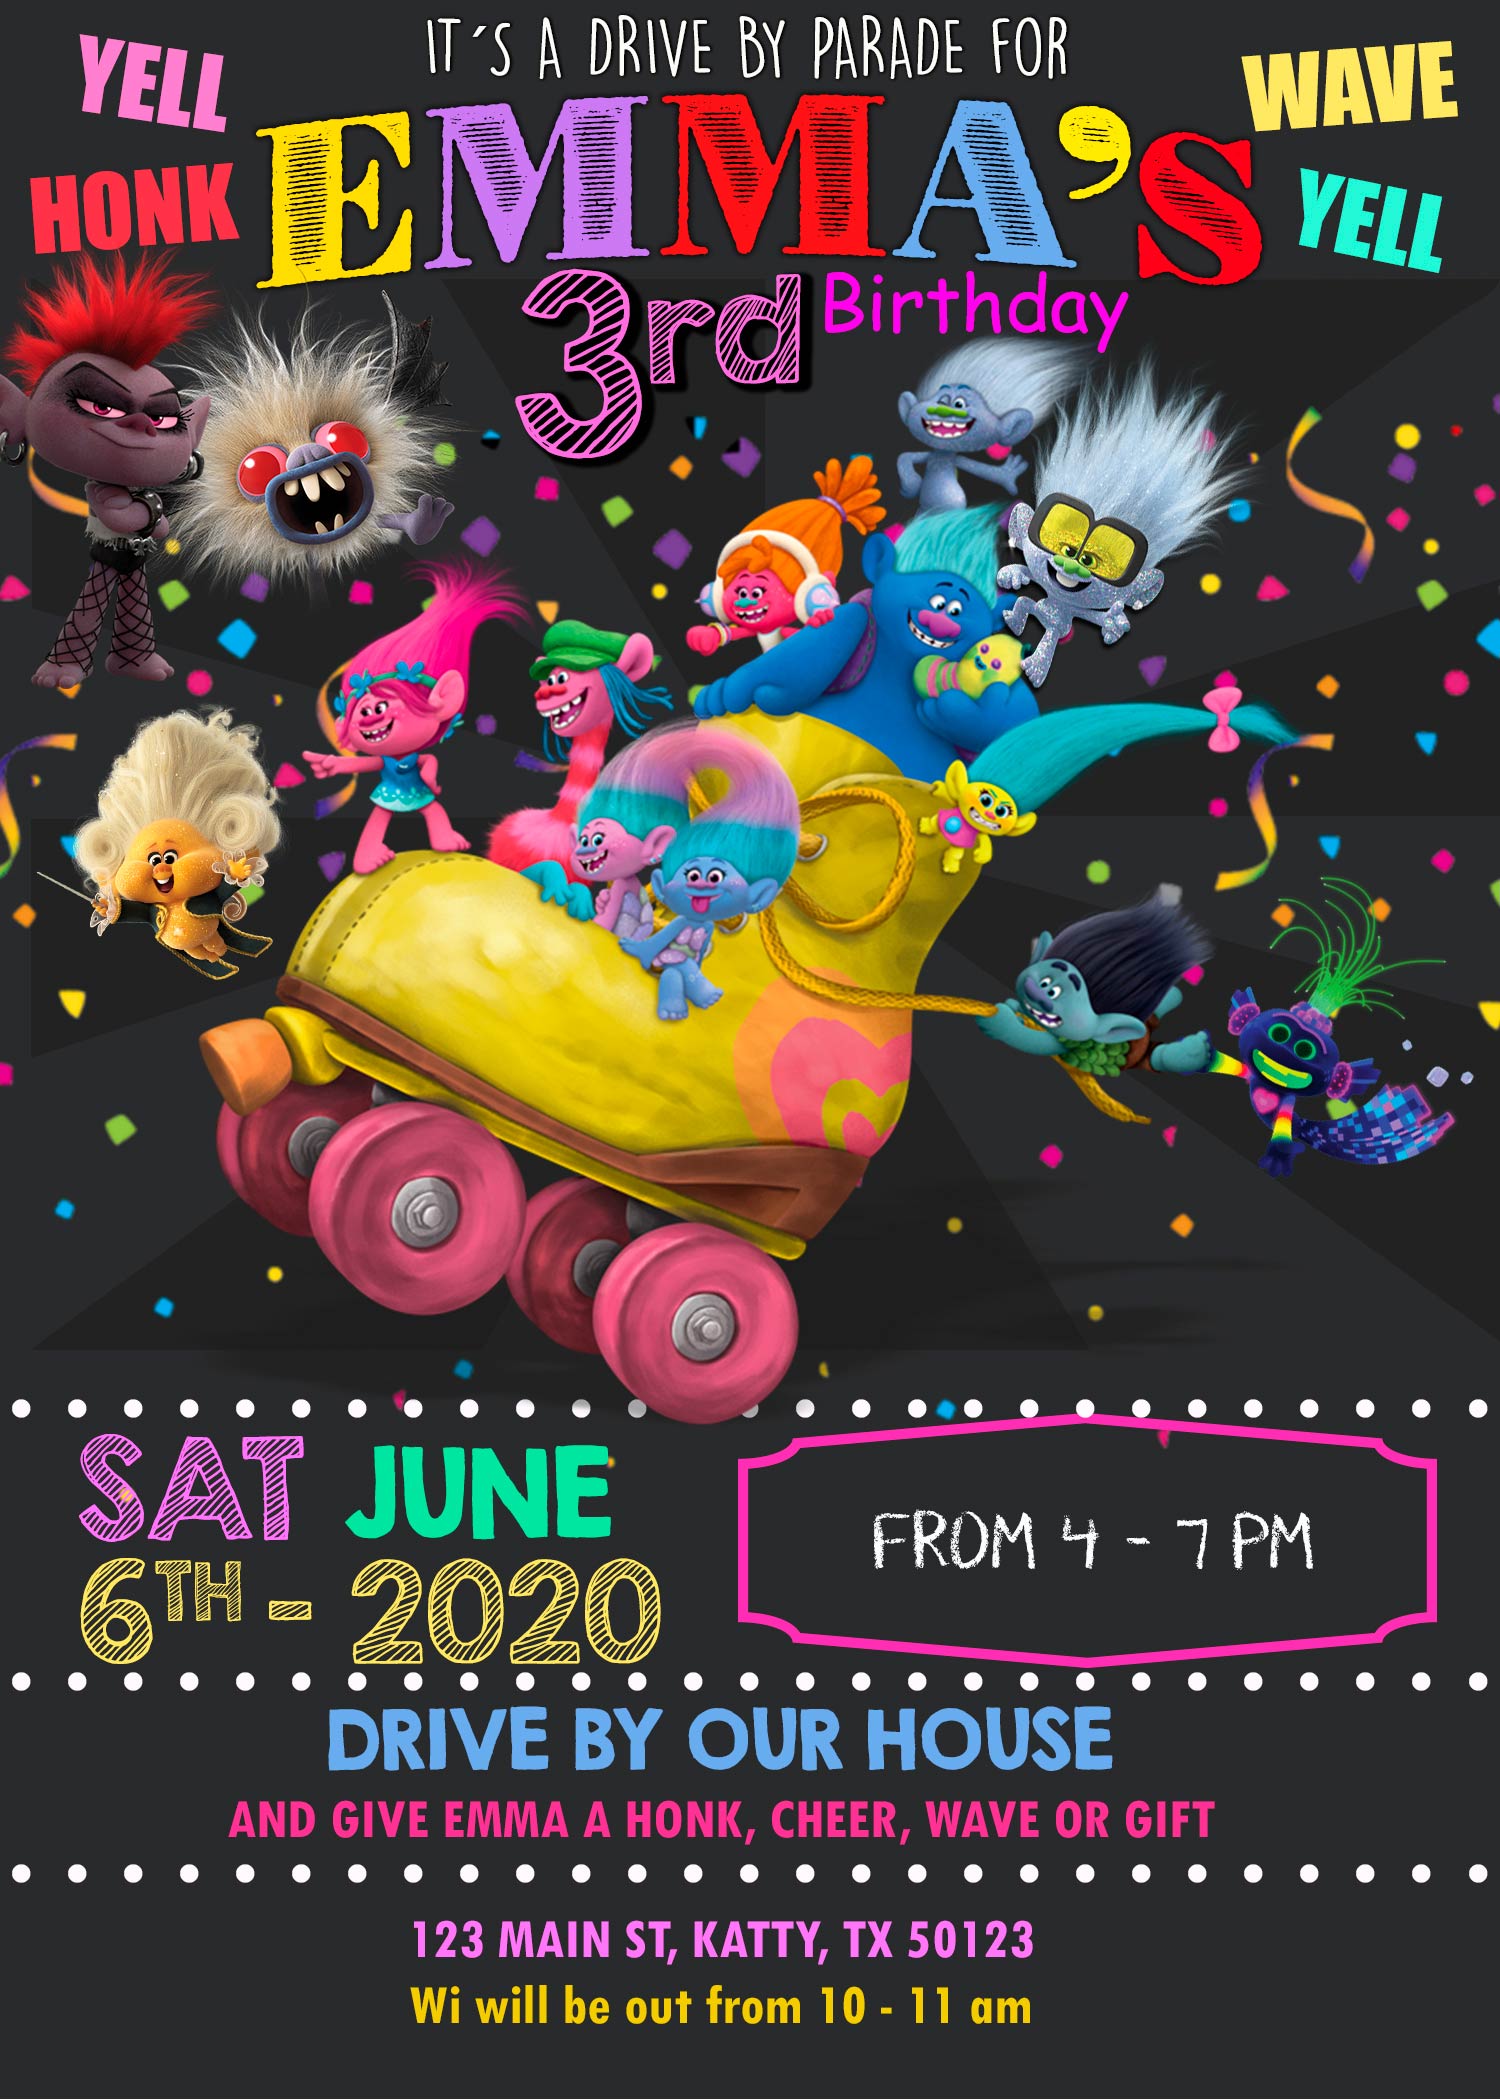 ▷ Digital Invitation Rainbow Friends Surprise Party, FREE